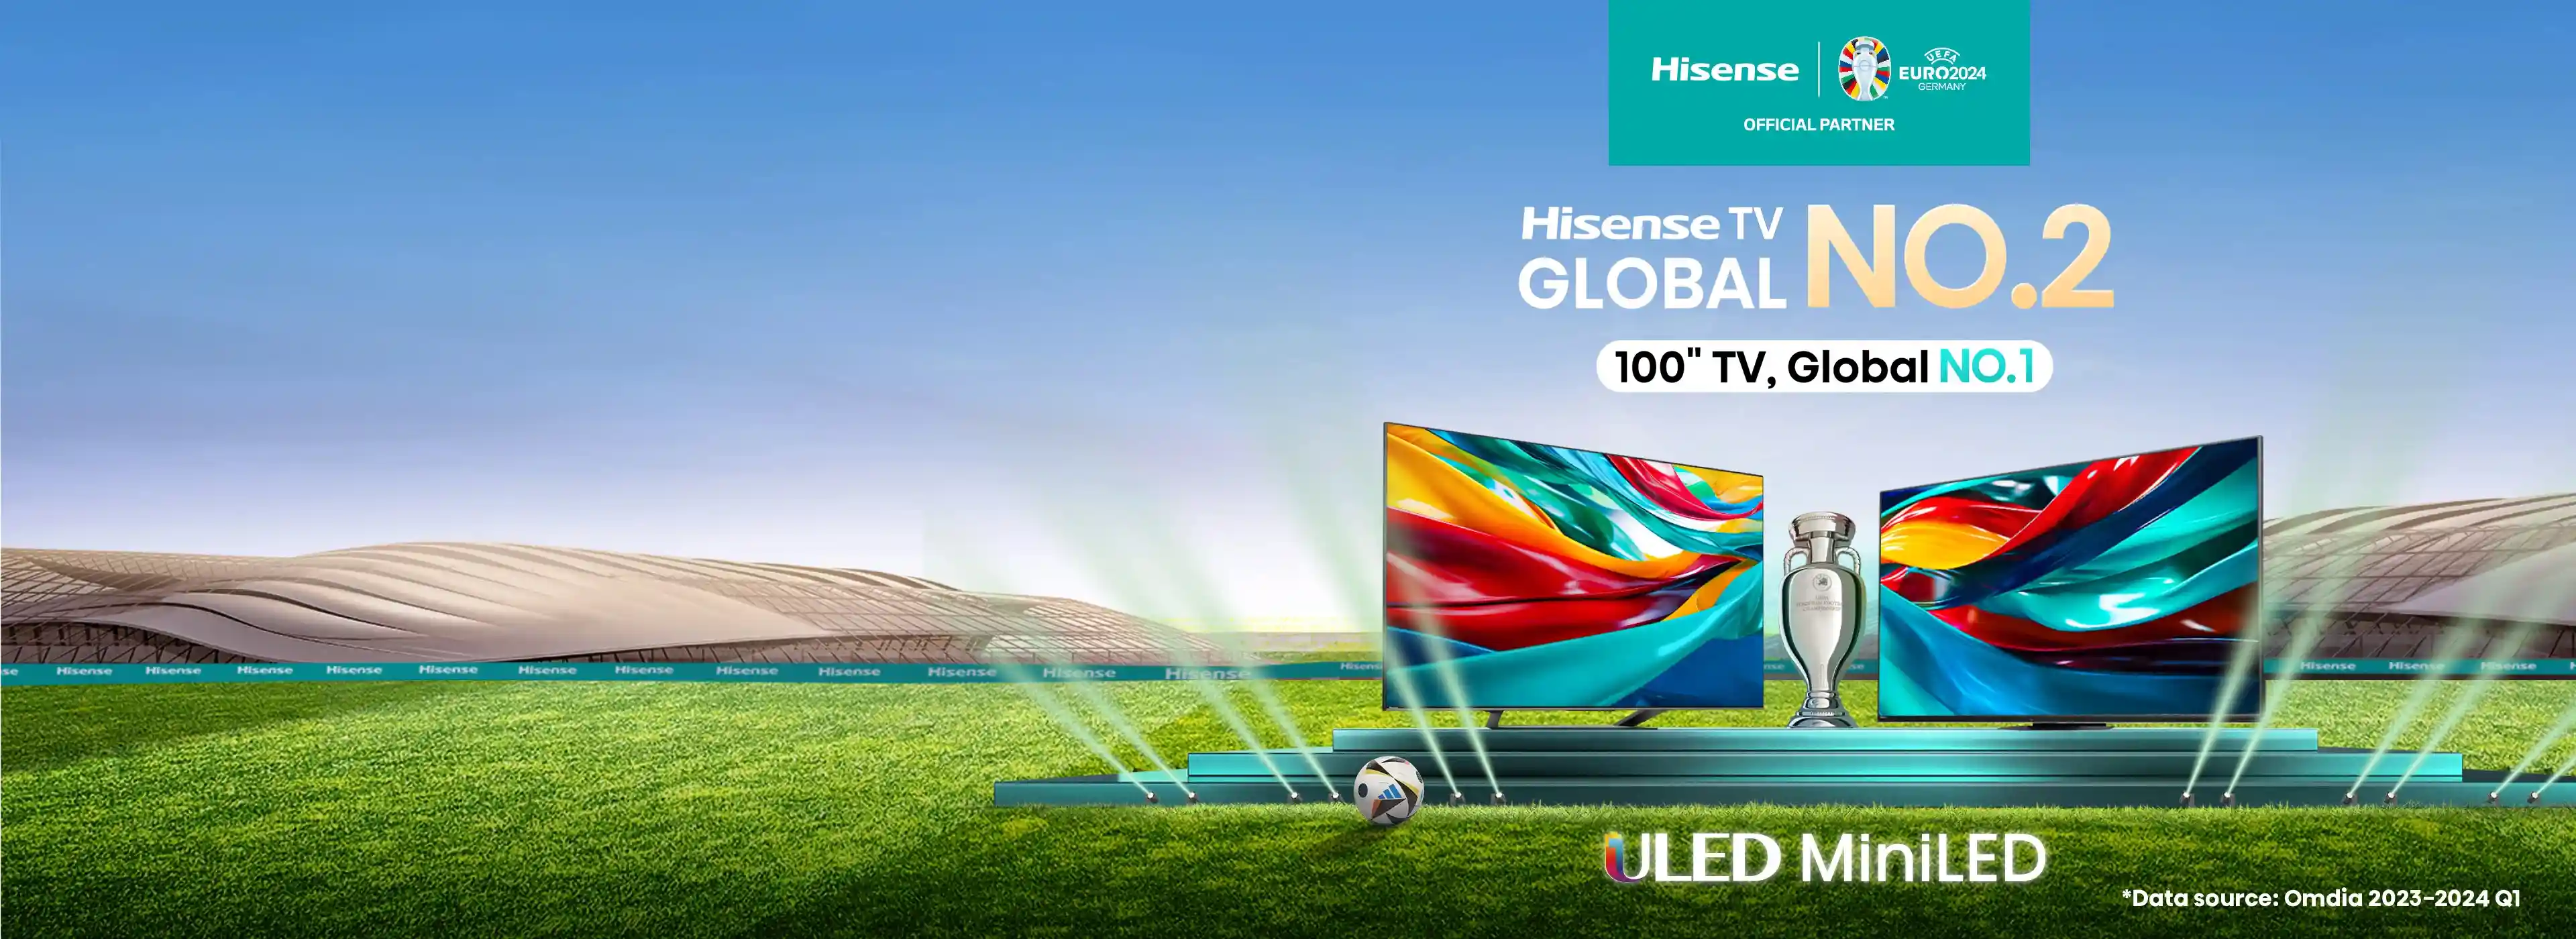 Hisense-EURO2024-No2-TV-HP-3840x1400-v3.webp